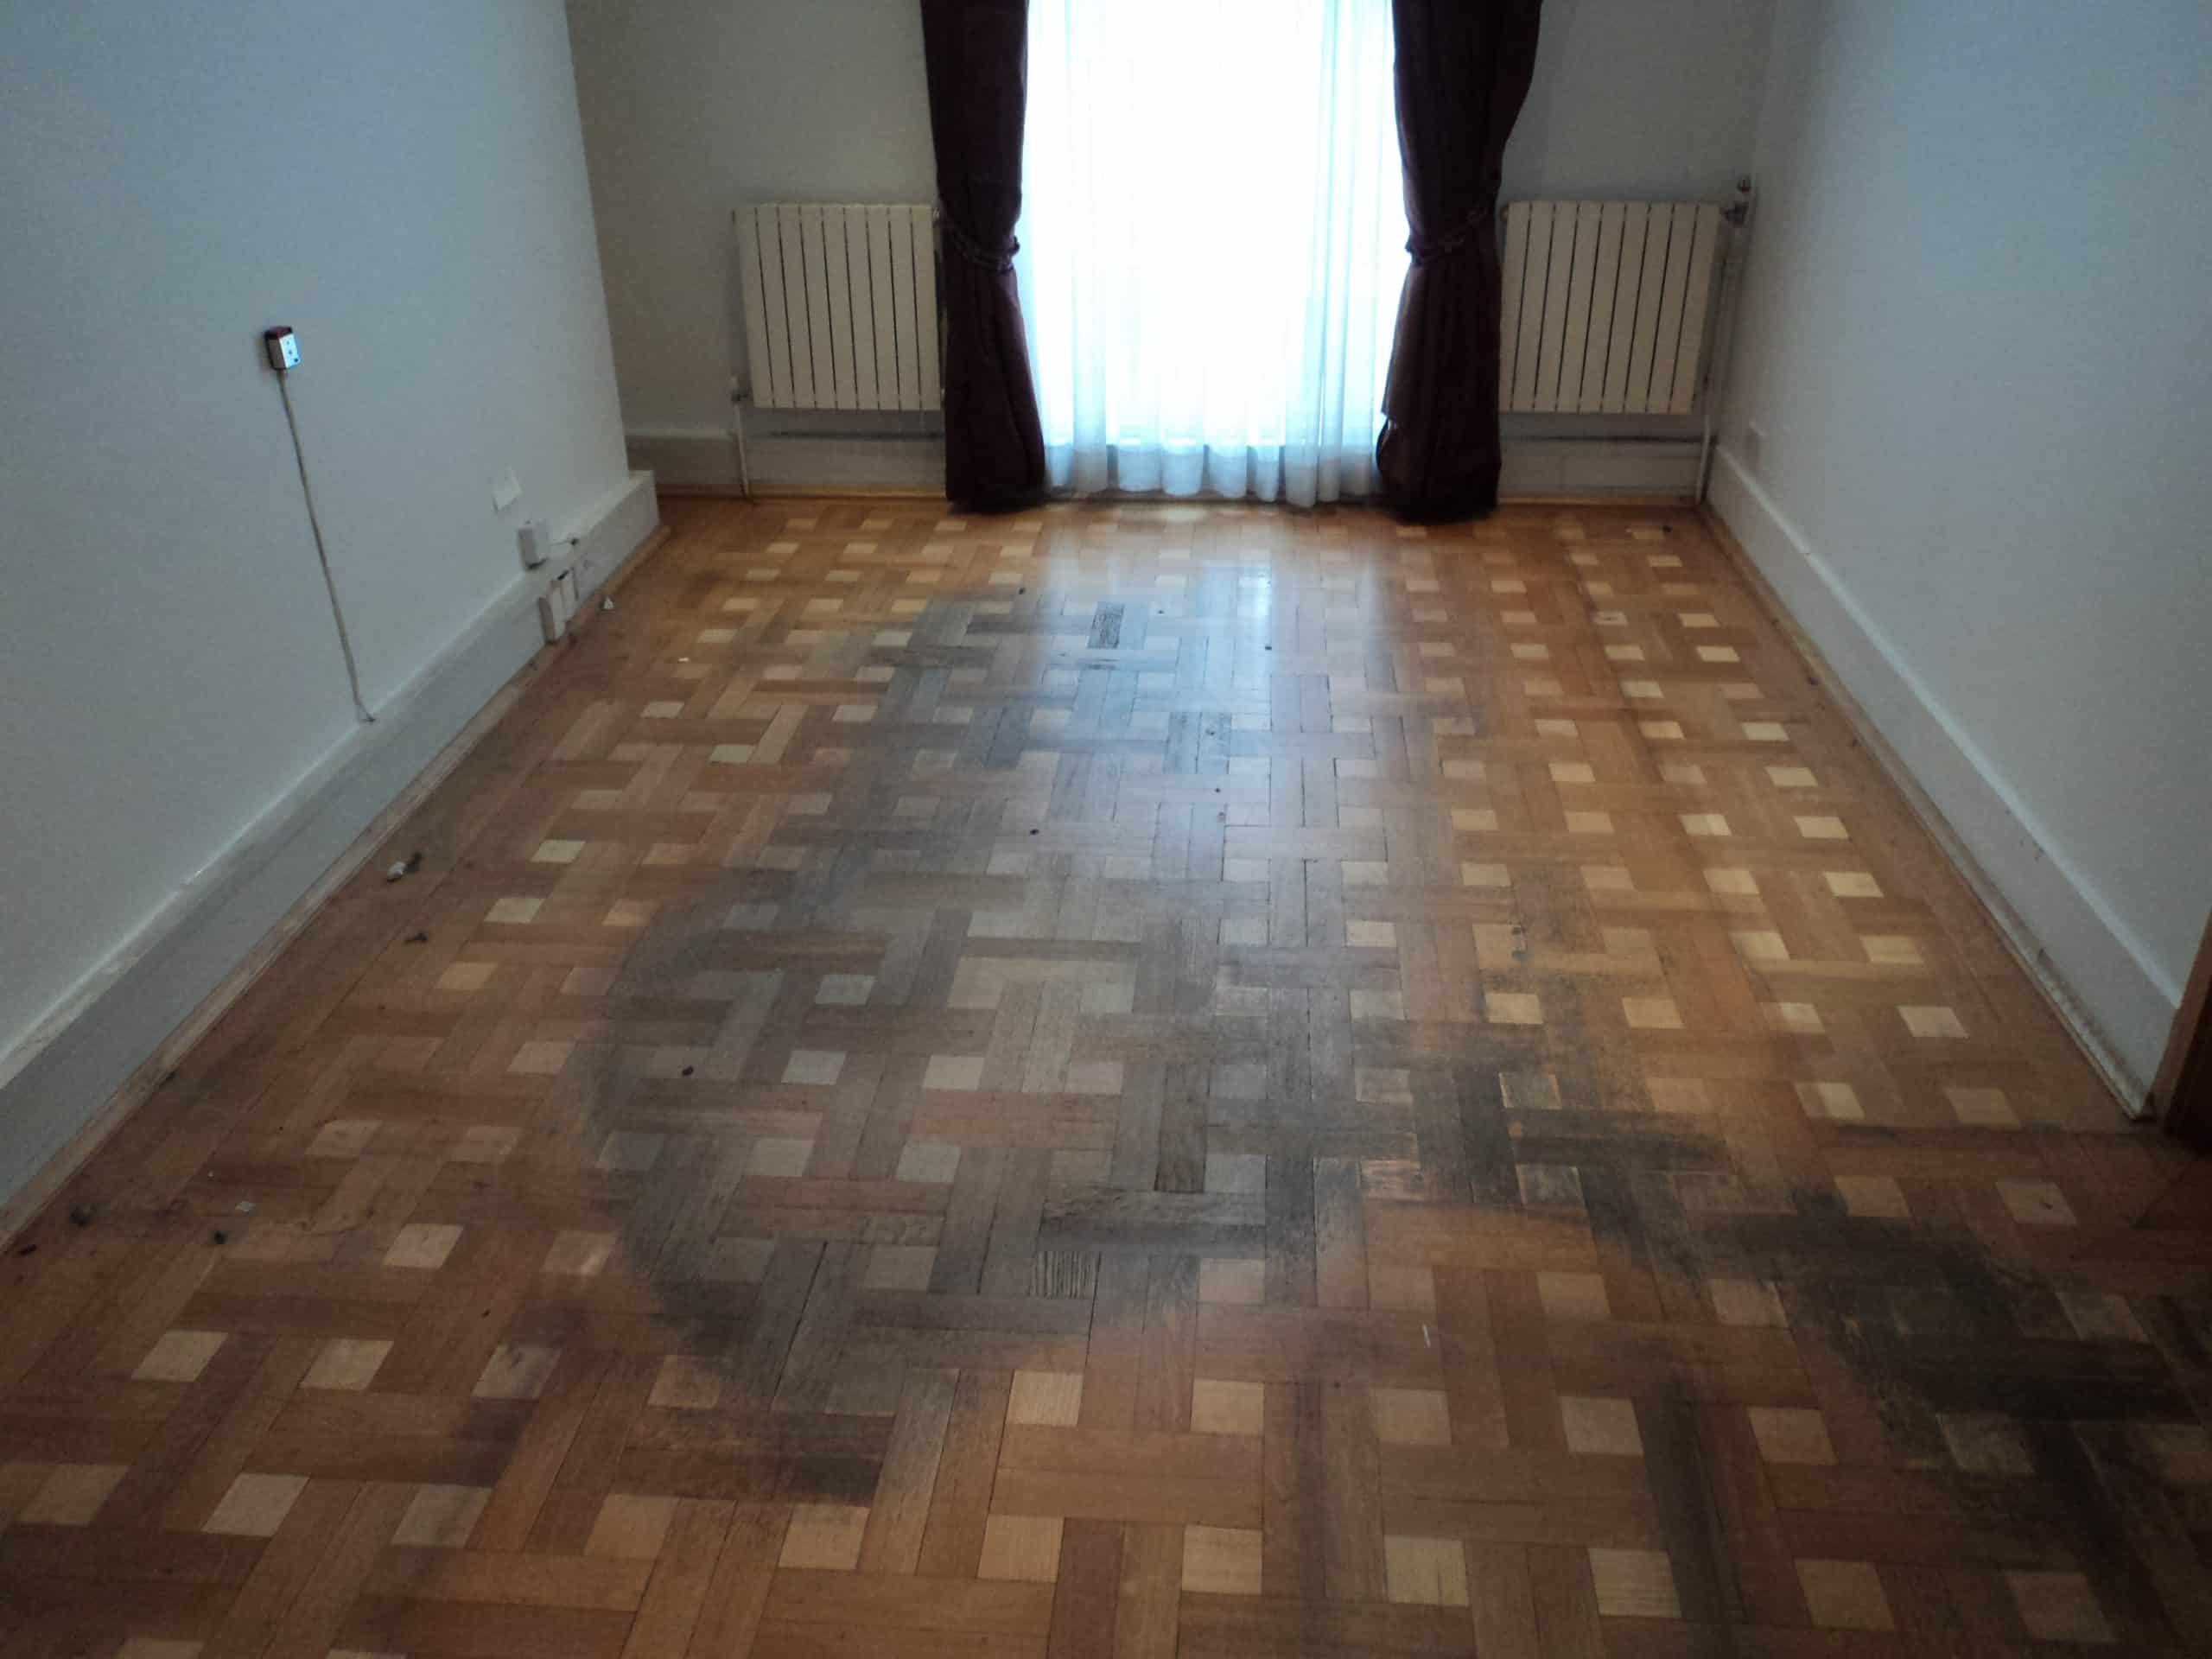 Pet stains on parquet wooden floor